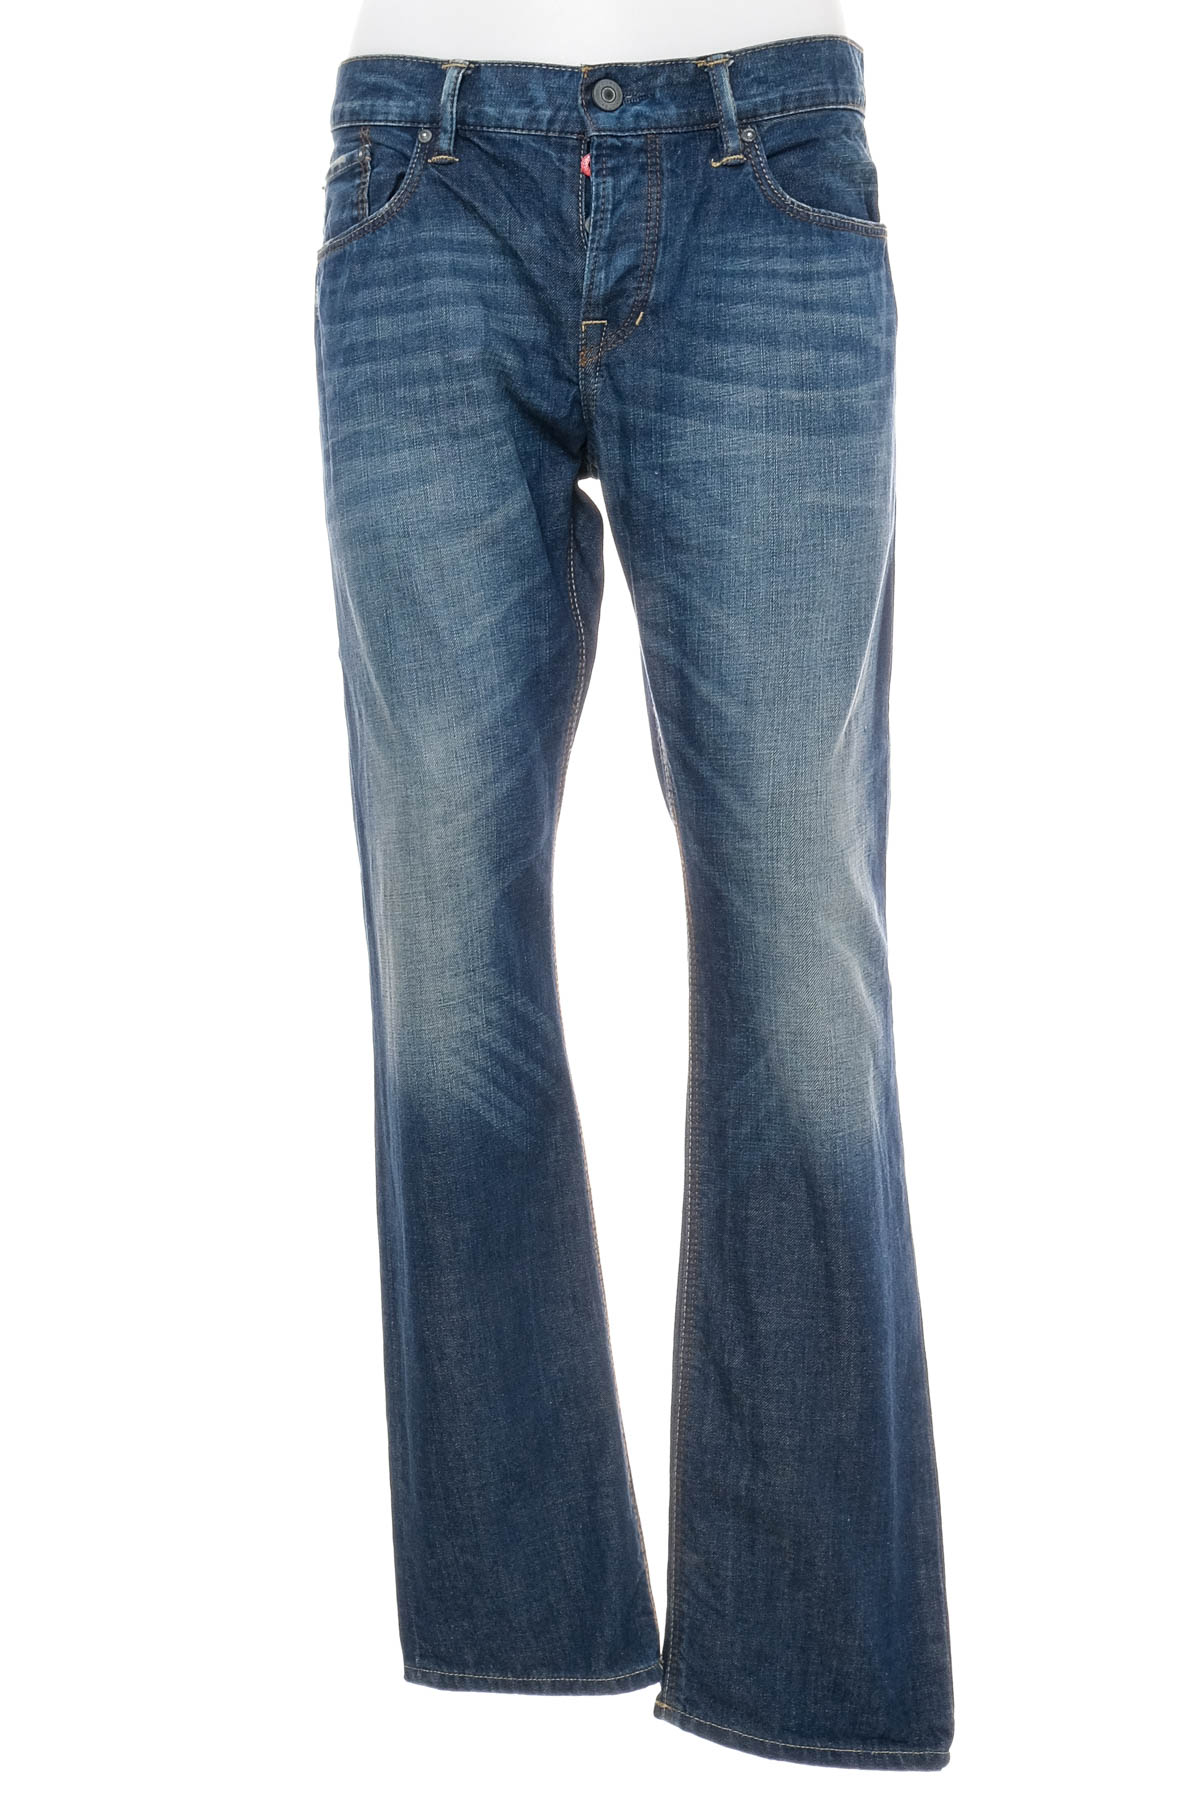 Men's jeans - Edc - 0